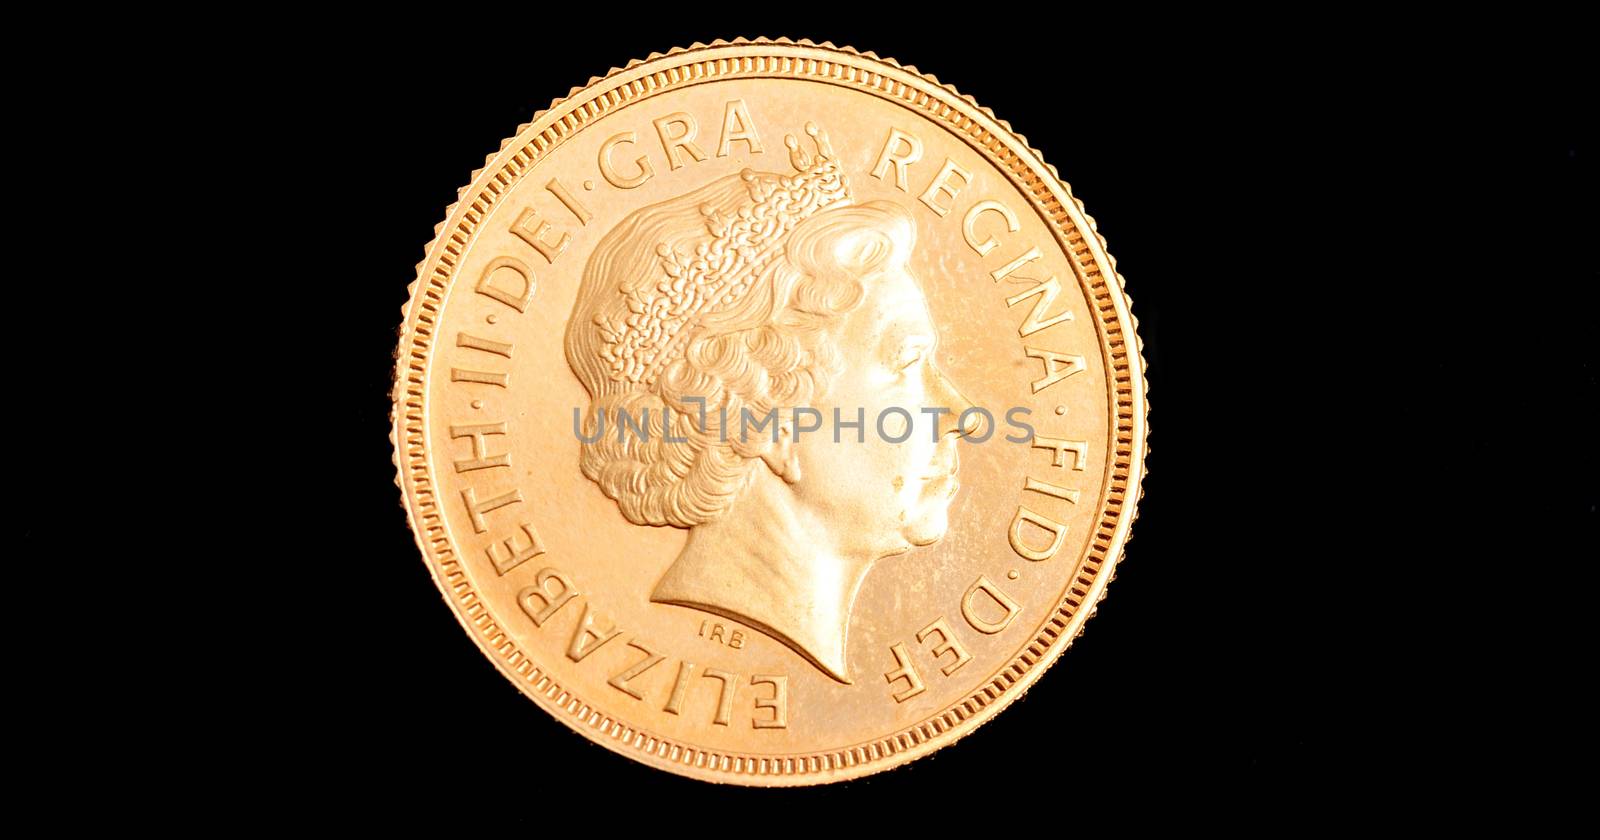 Gold Sovereign 22 Carat British Coin